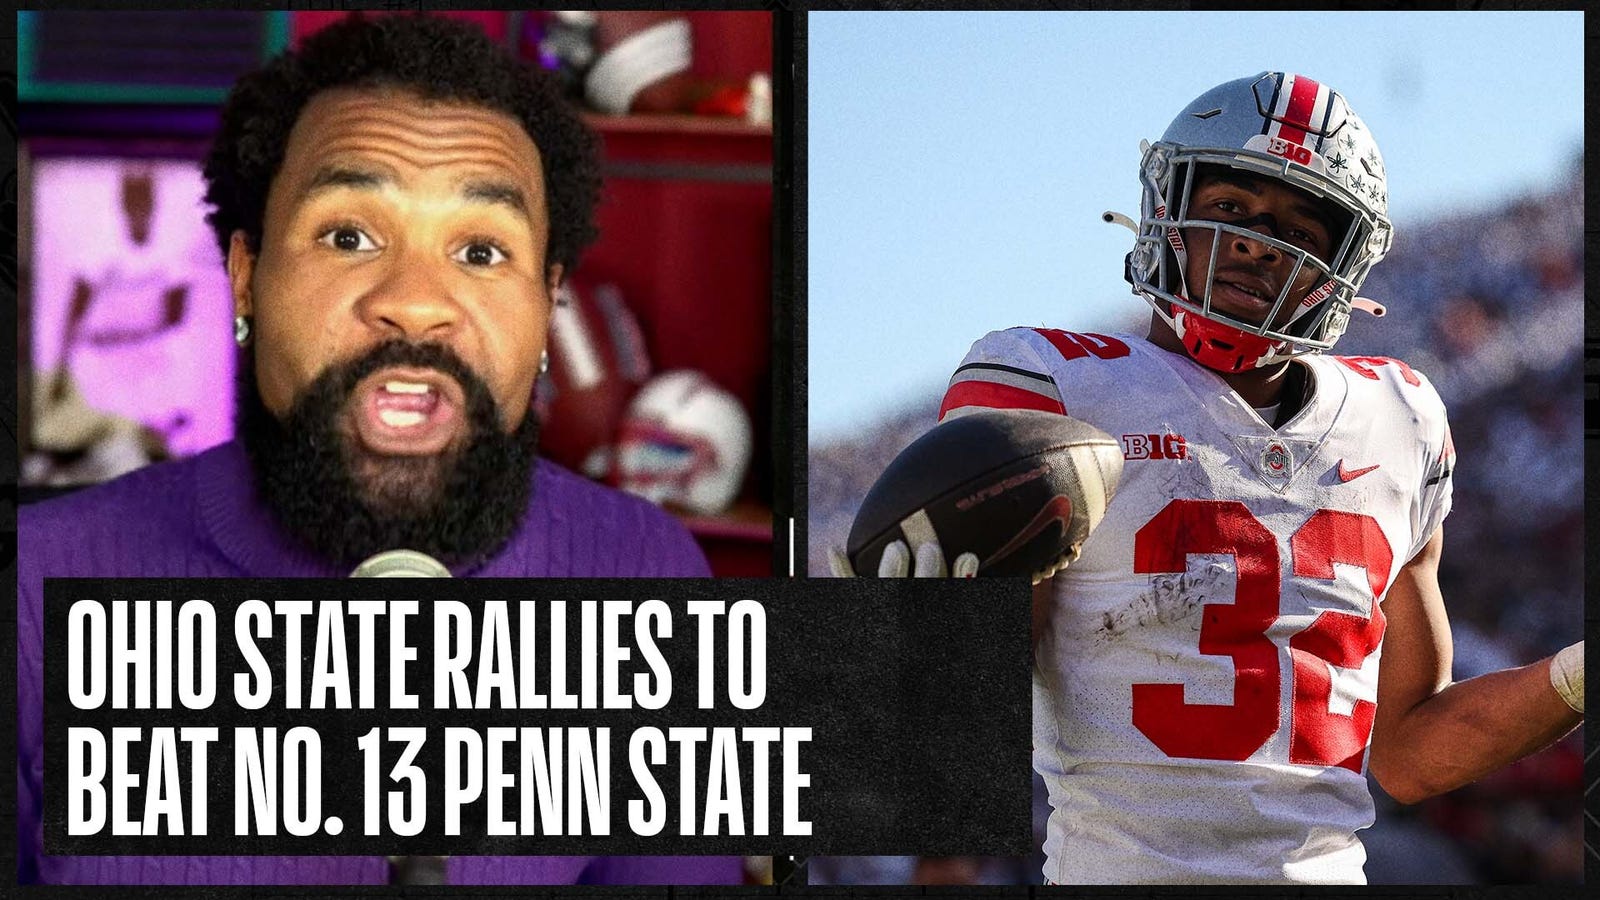 Ohio State rallies to beat Penn State